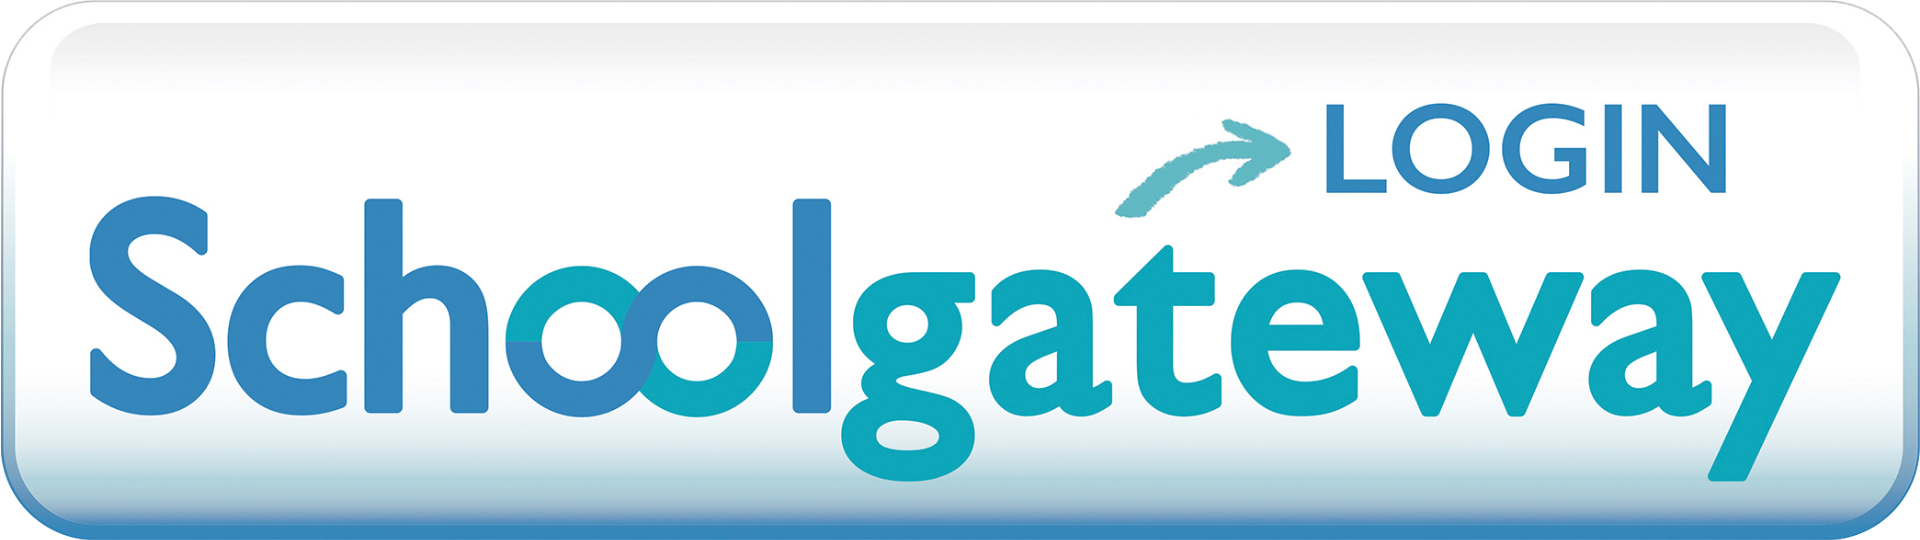 Sg Login Button - School Gateway App Logo (1920x540), Png Download